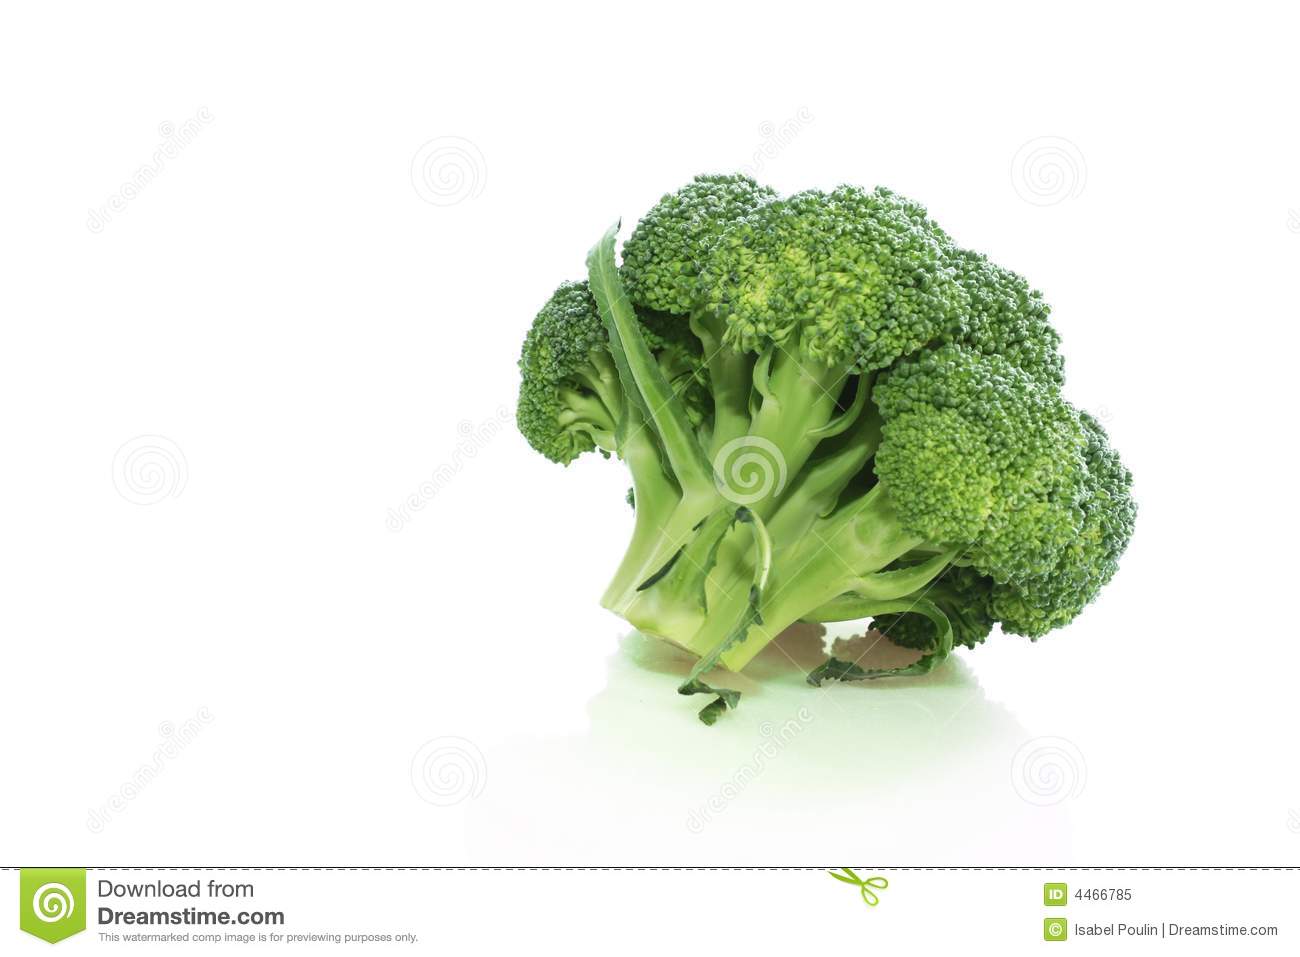 Broccoli On A White Background Mr No Pr No 2 280 1